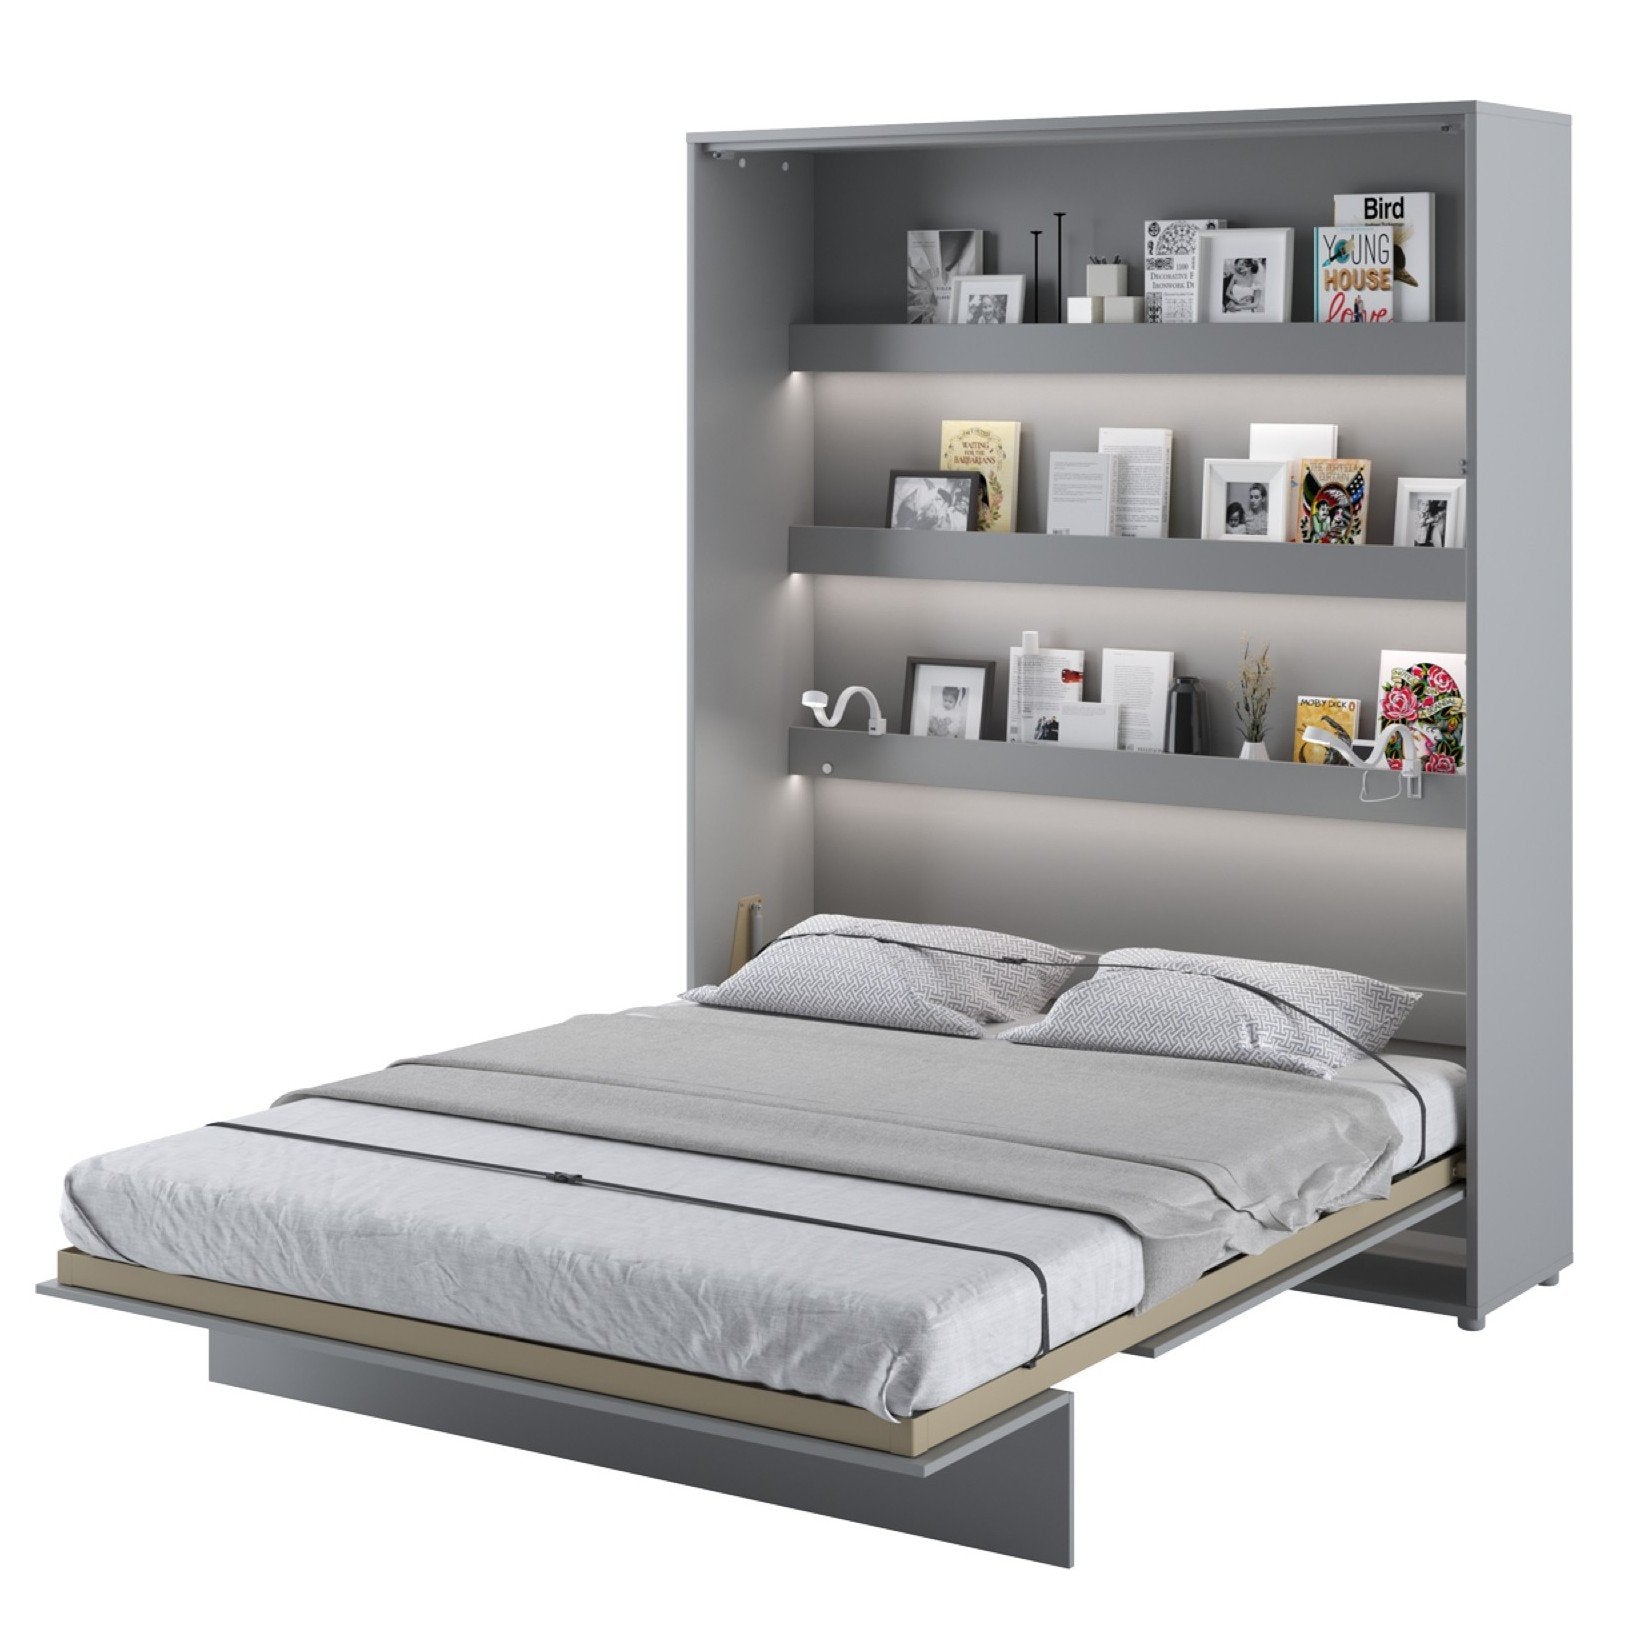 View BC12 Vertical Wall Bed Concept 160cm Murphy Bed Grey Matt 160 x 200cm information